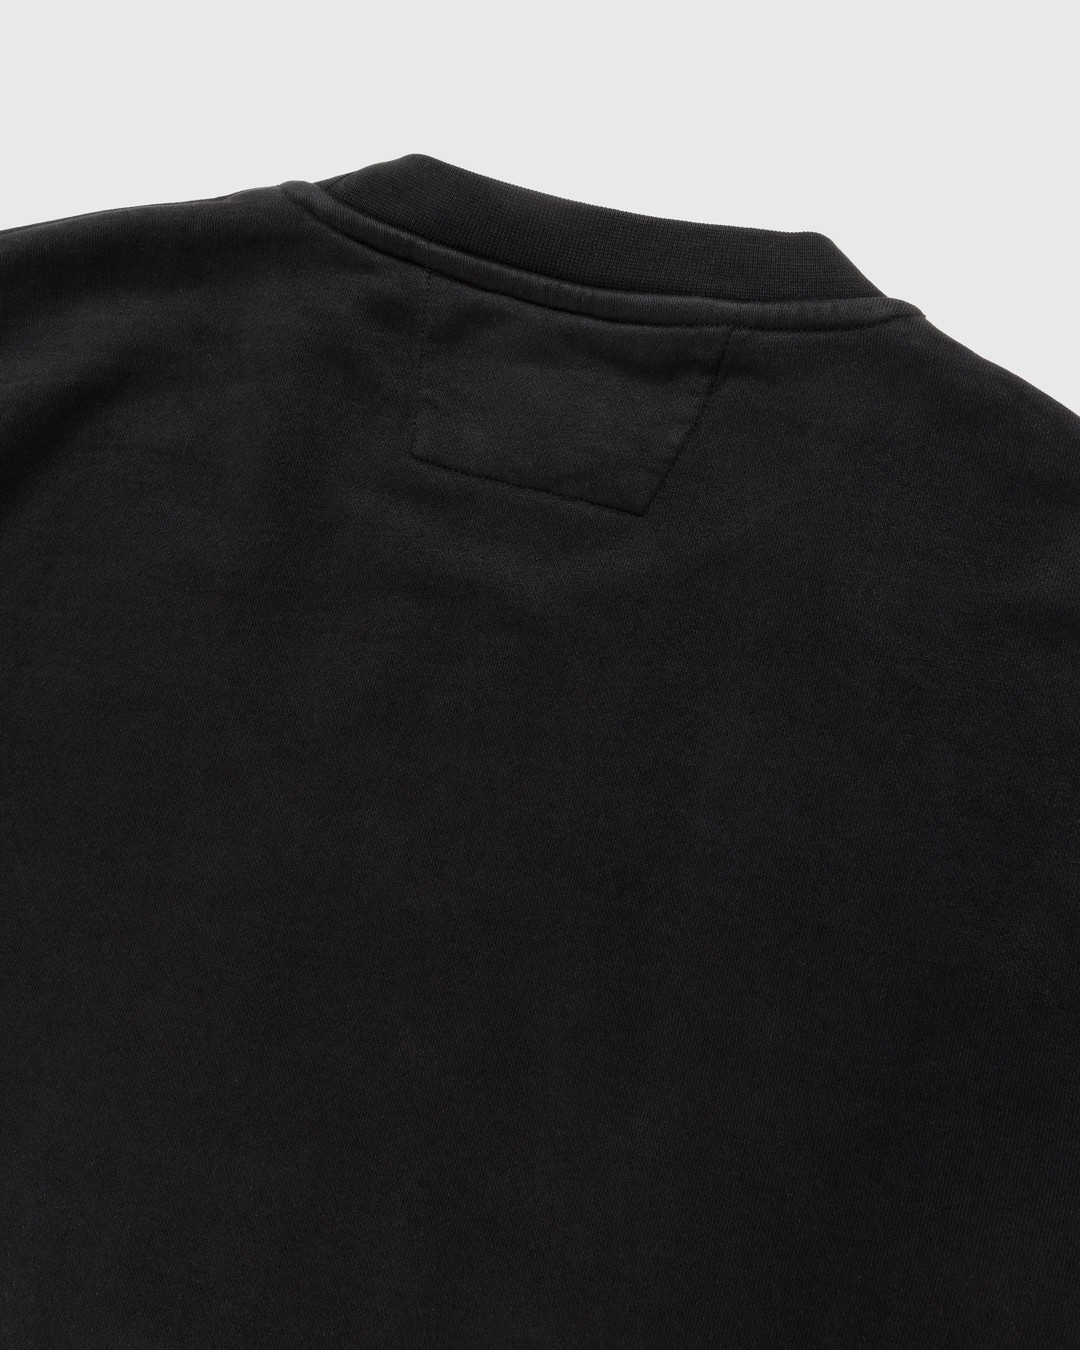 C.P. Company – Diagonal Raised Fleece Crewneck Sweatshirt Black - Sweats - Black - Image 4